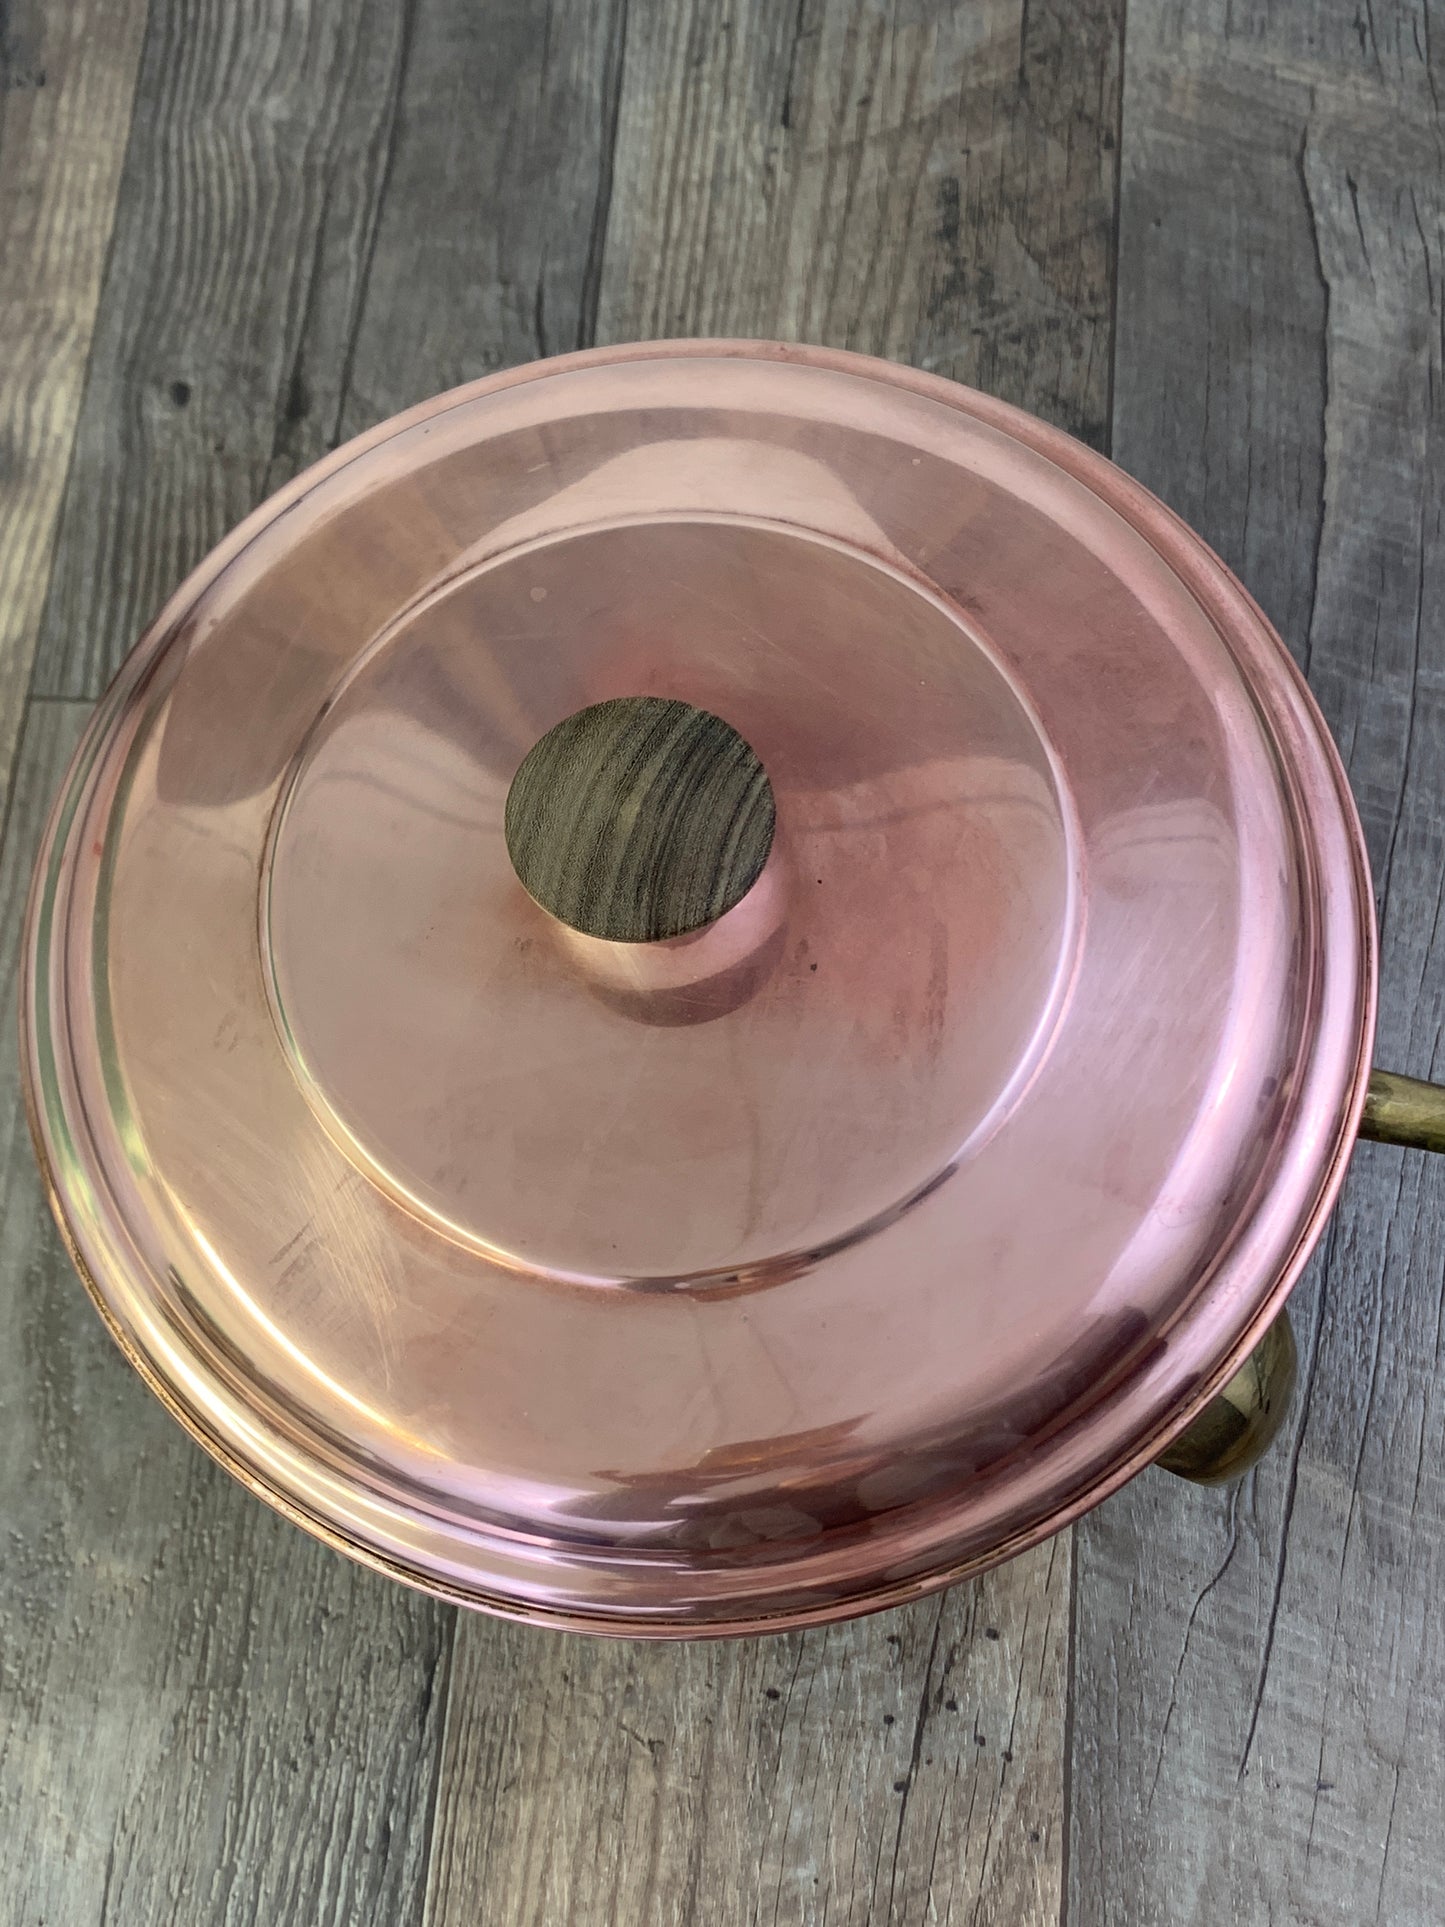 Vintage Copper Chaffing Dish Double Broiler Warming Dish Vintage Kitchen